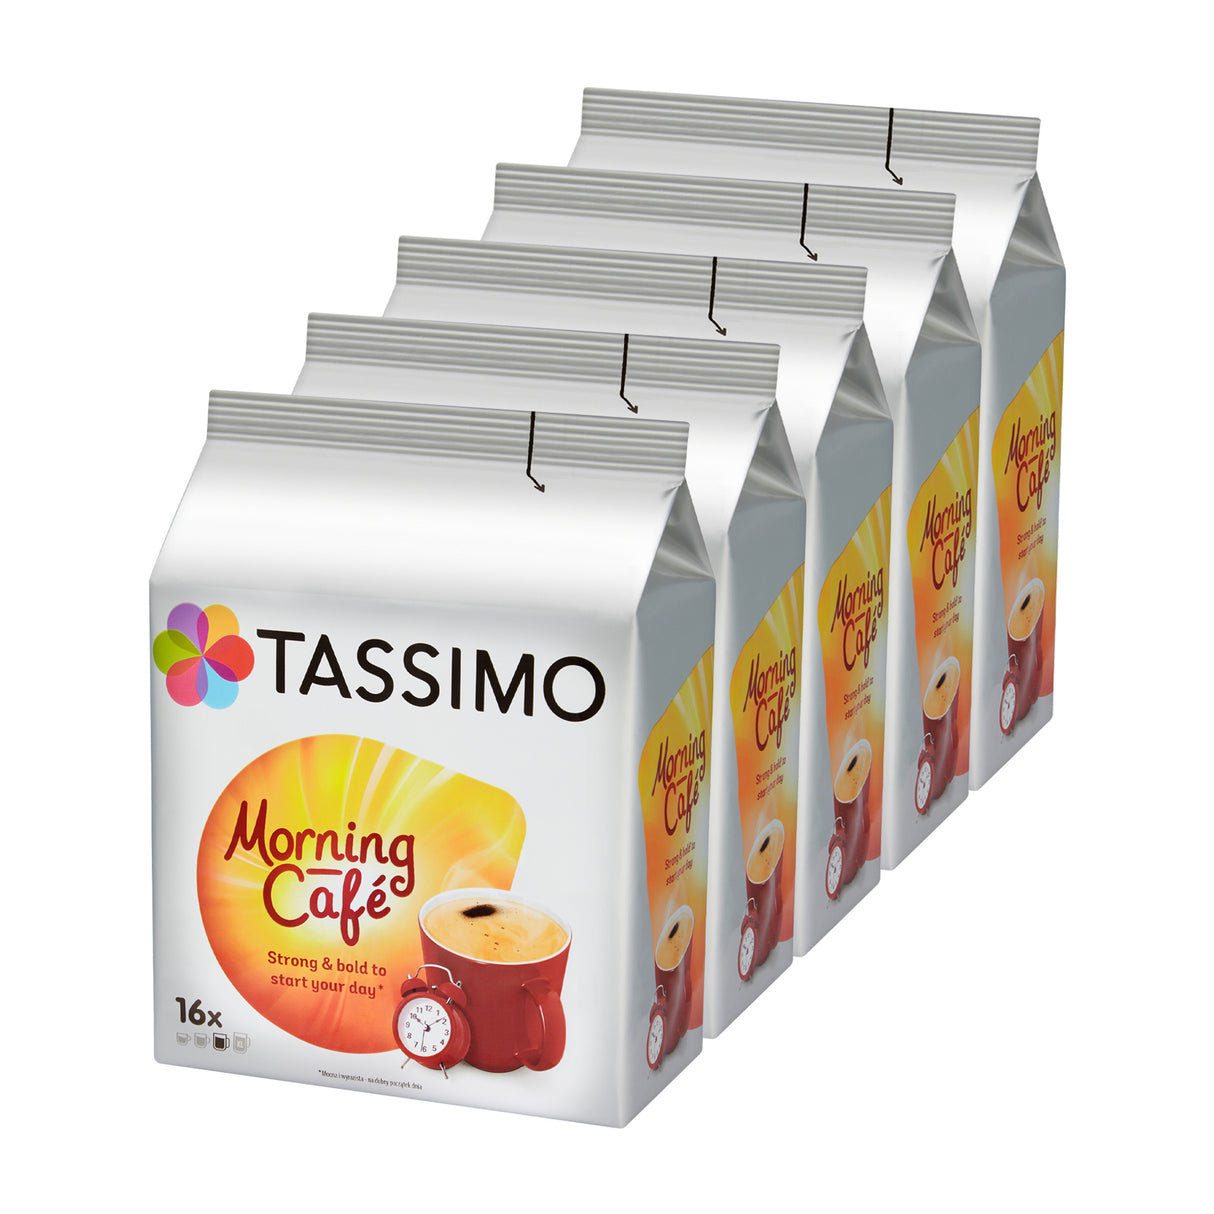 Tassimo Morning Cafe Coffee Case